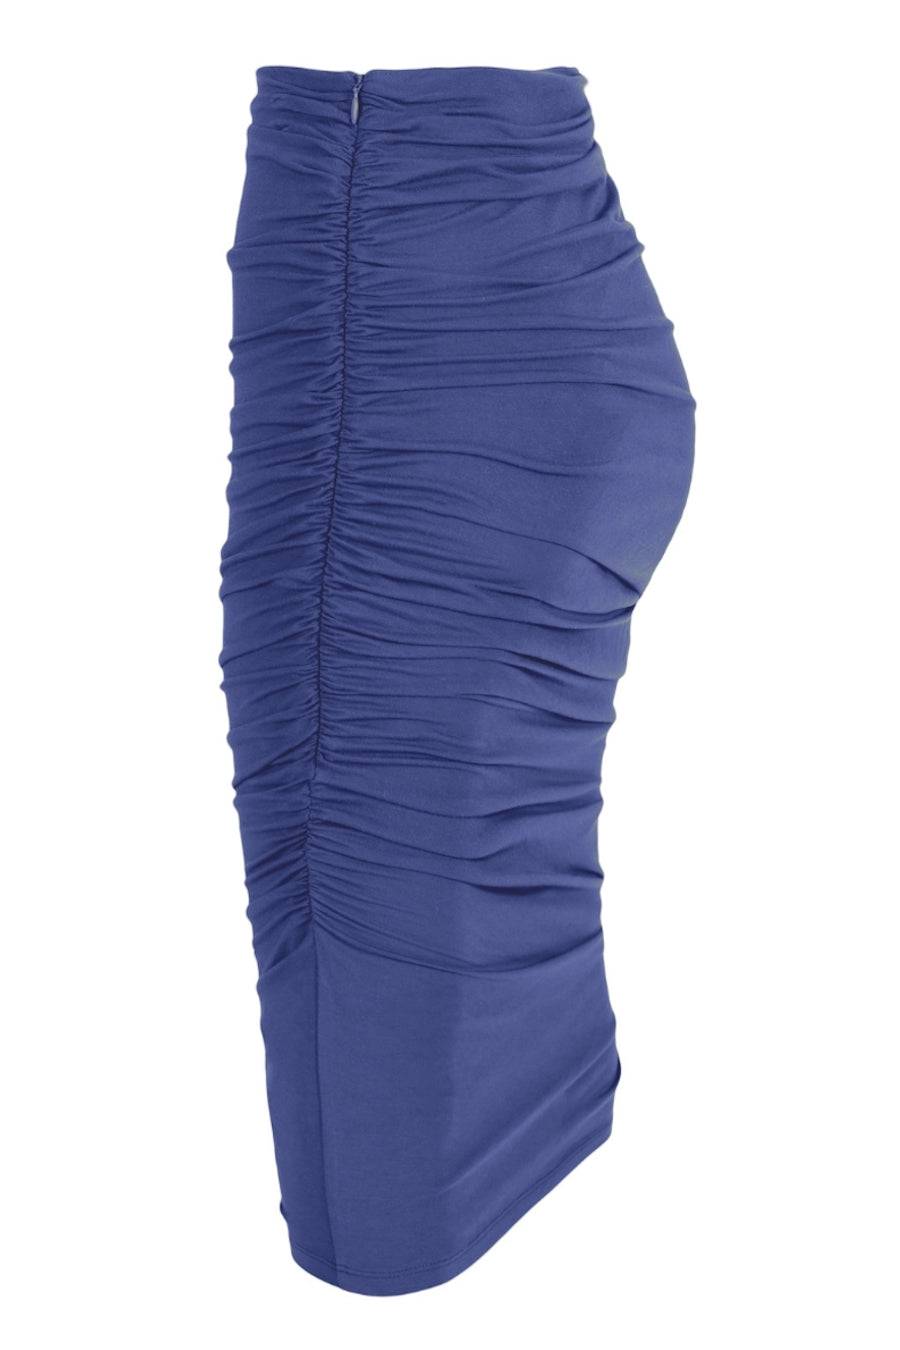 Embodycon™ Bamboo Shaping Skirt - Ocean Blue Embodycon